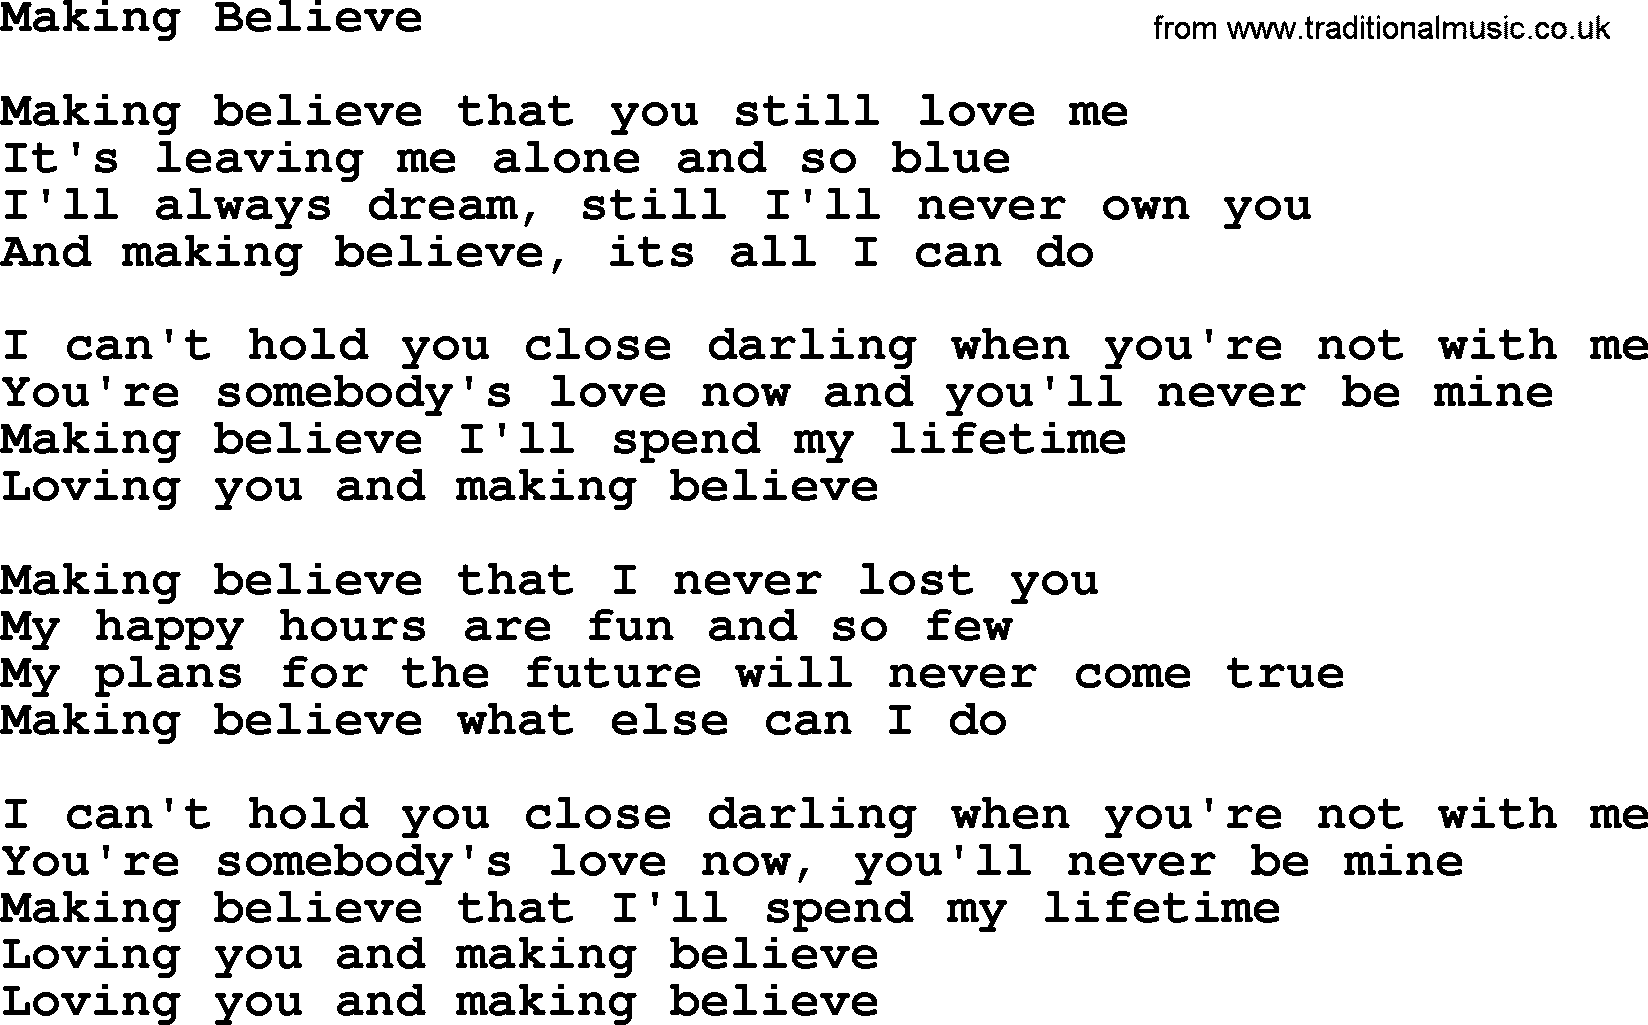 Willie Nelson song: Making Believe lyrics